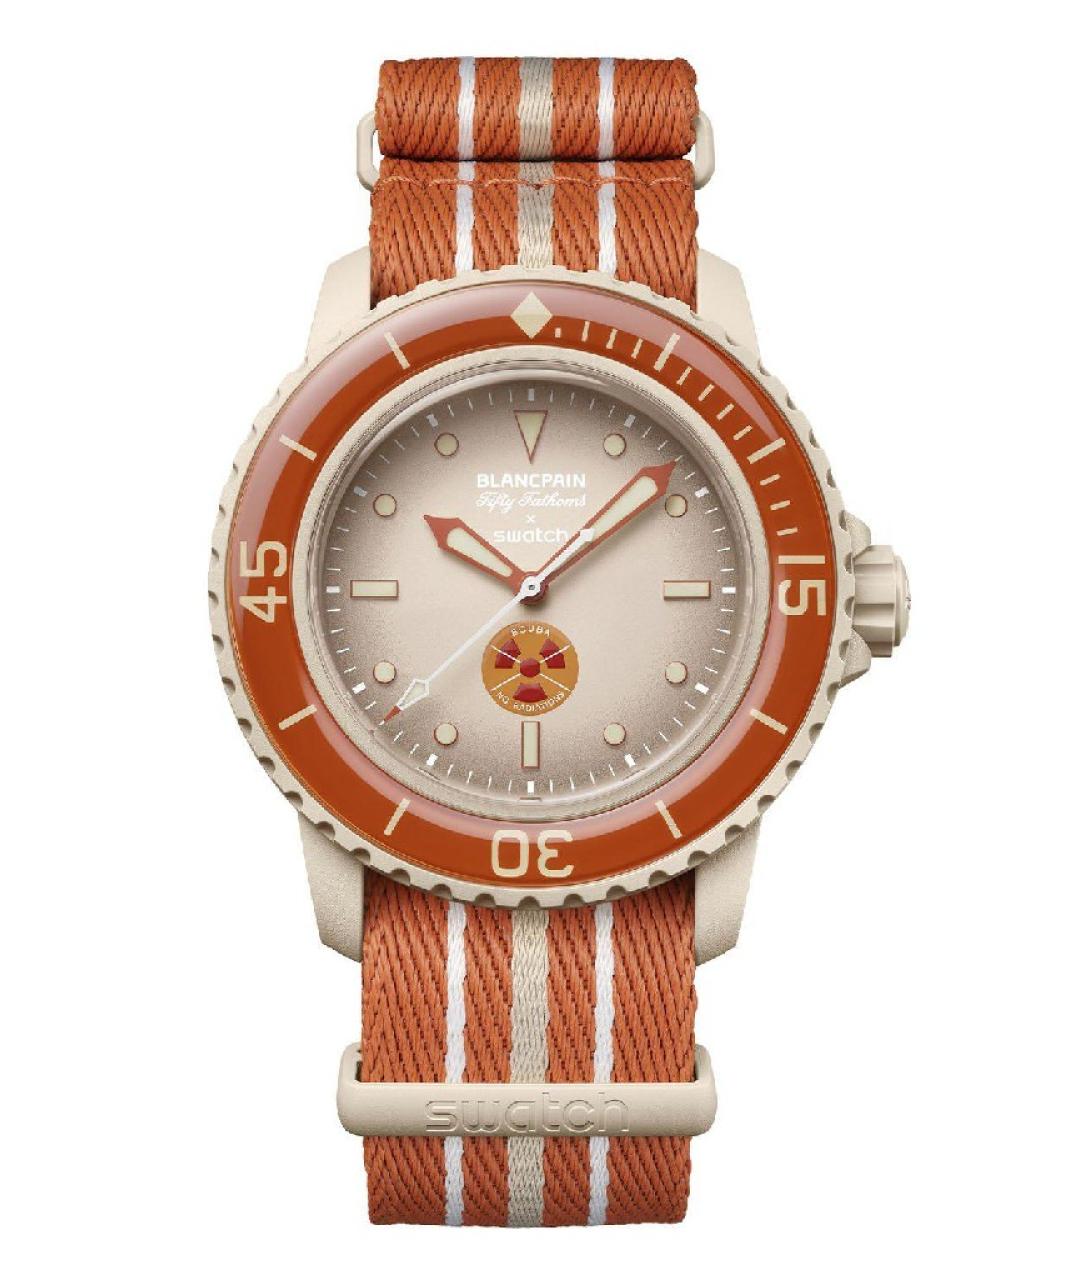 Blancpain Оранжевое стальные часы, фото 1